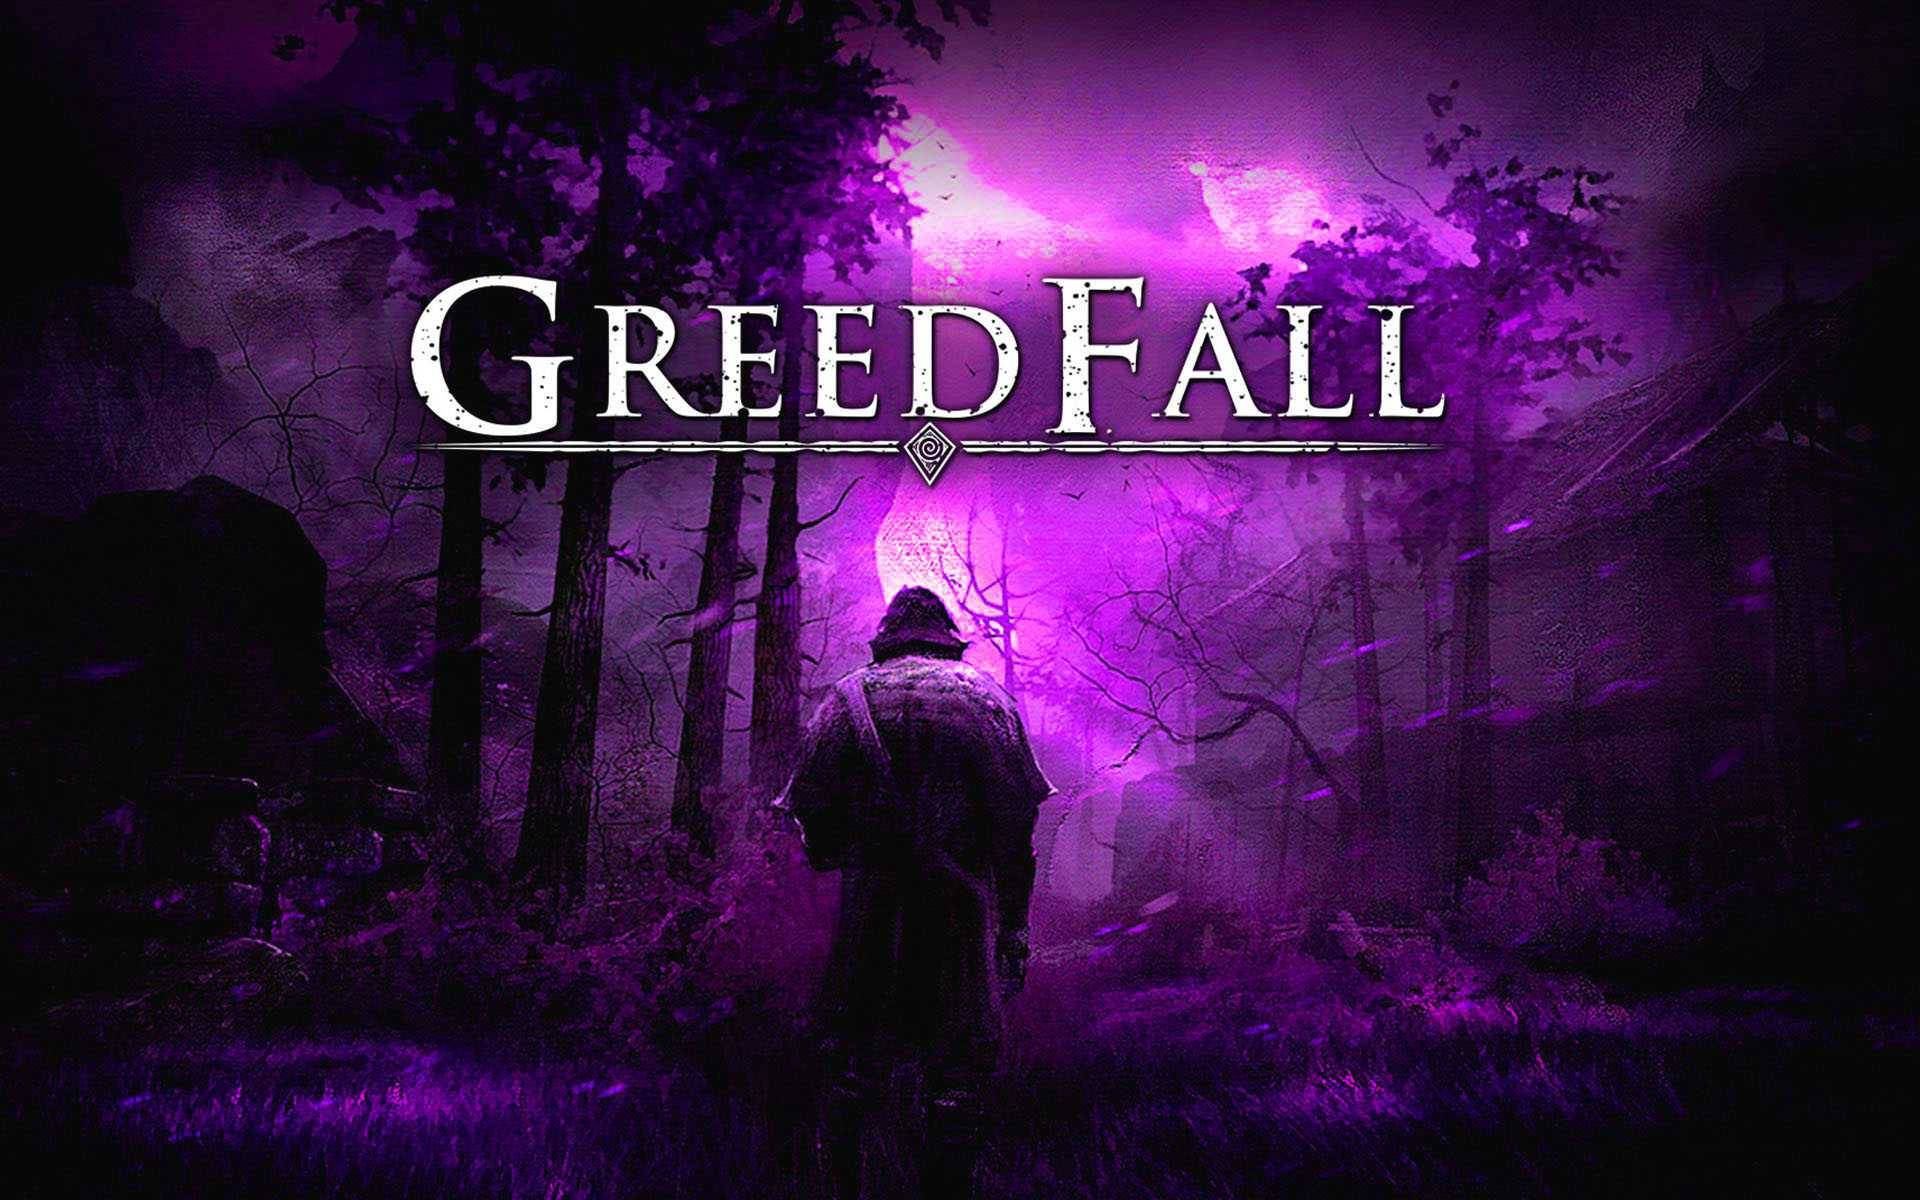 Greedfall Purple Forest Background Wallpaper